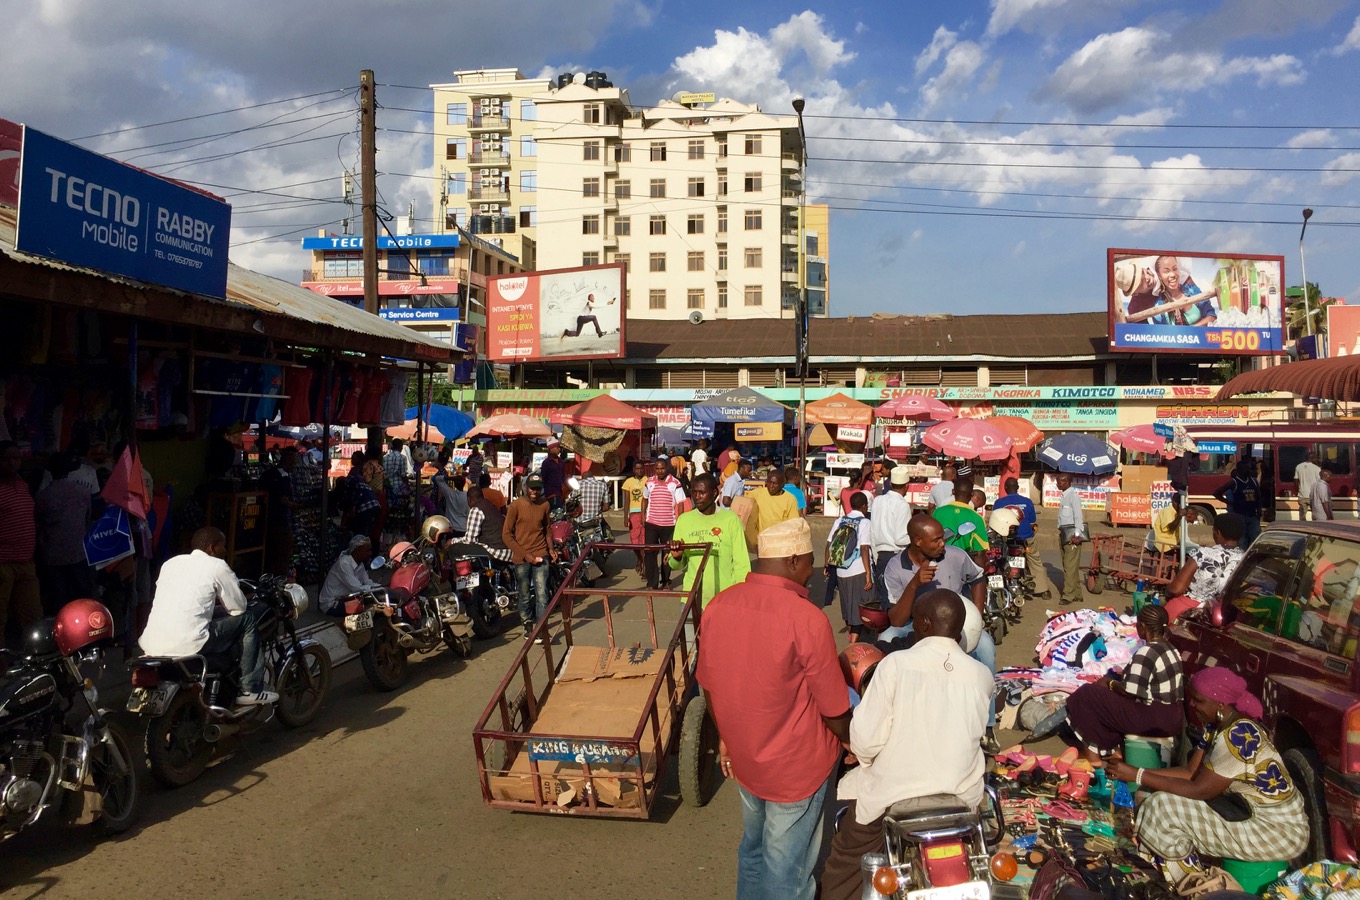 Market in Arusha